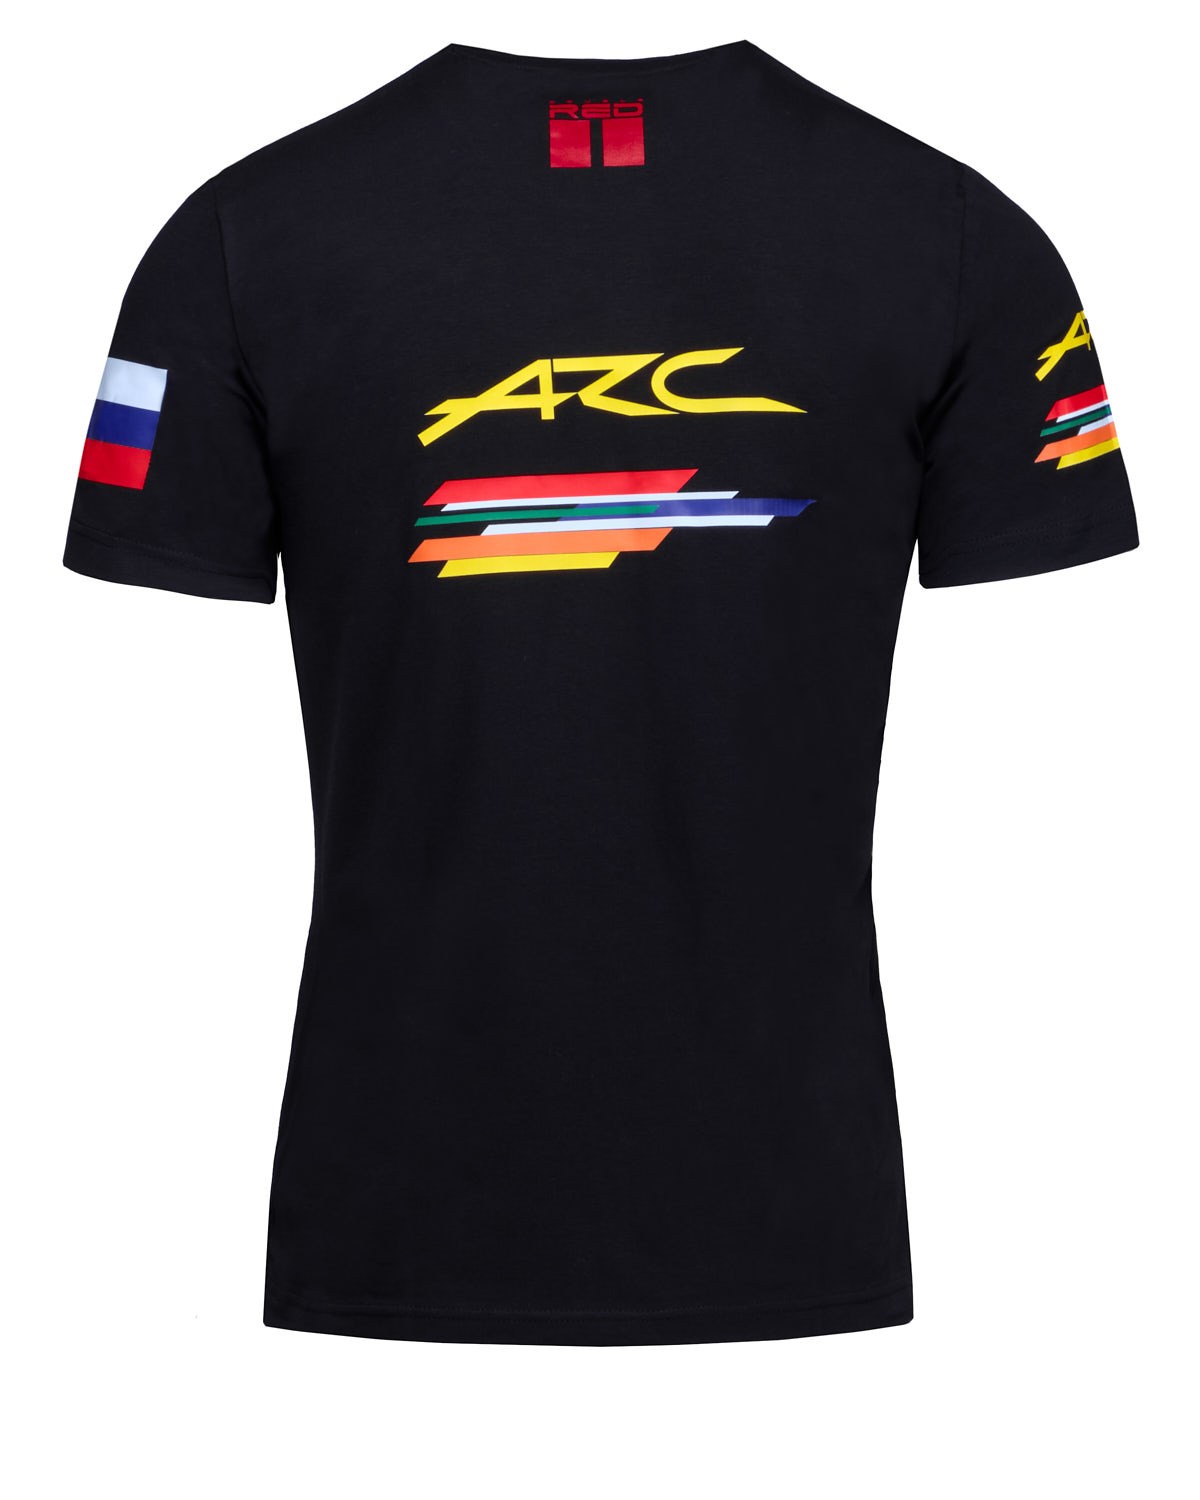 ARC T-Shirt Black